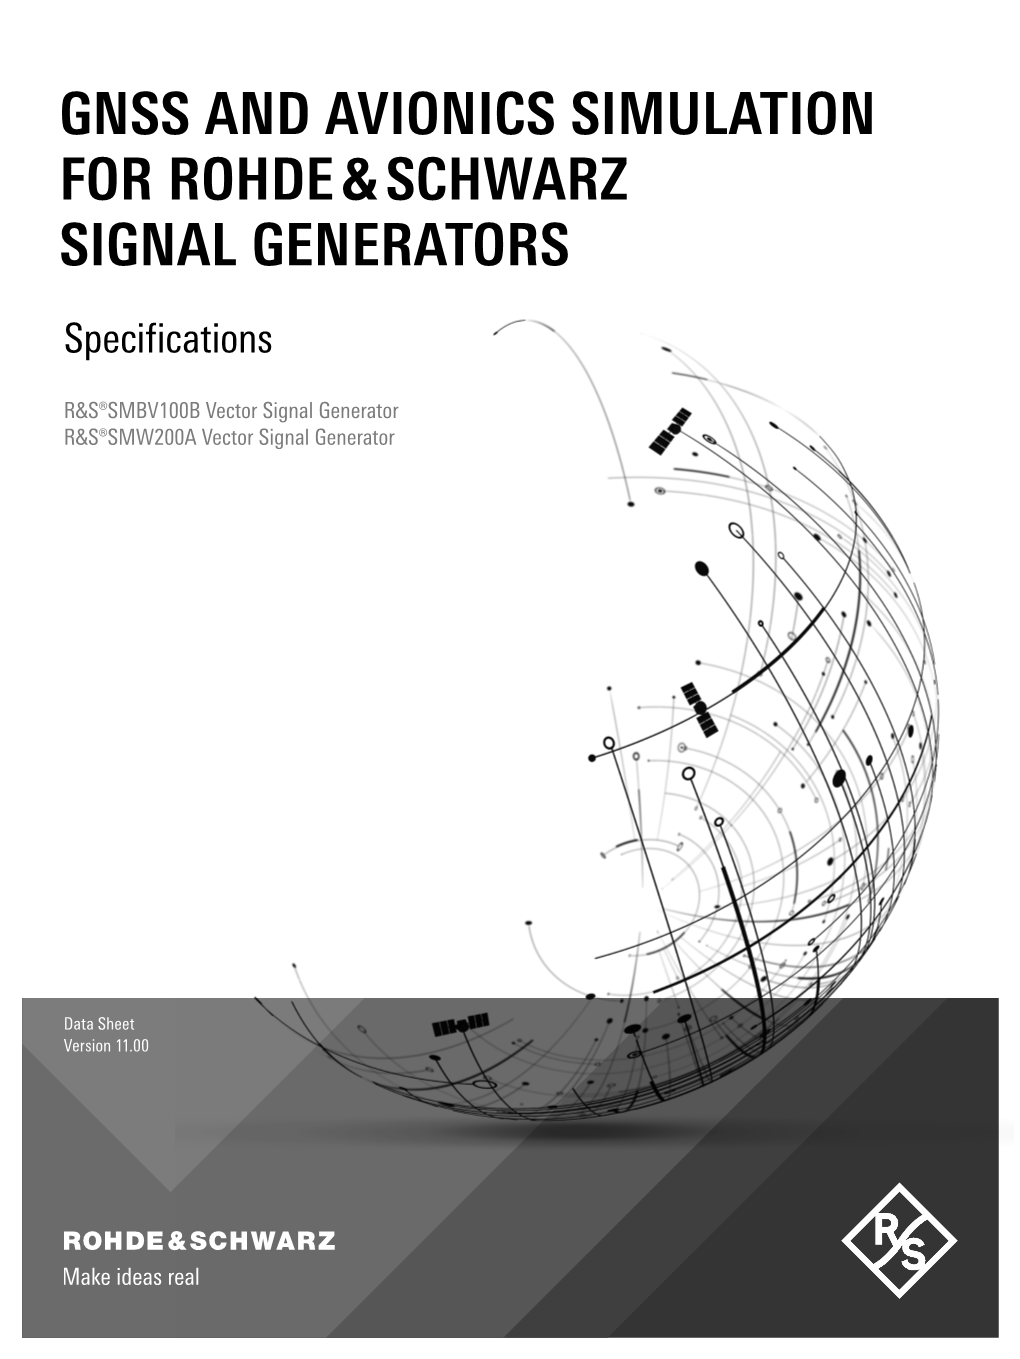 Gnss and Avionics Simulation for Rohde & Schwarz Signal Generators